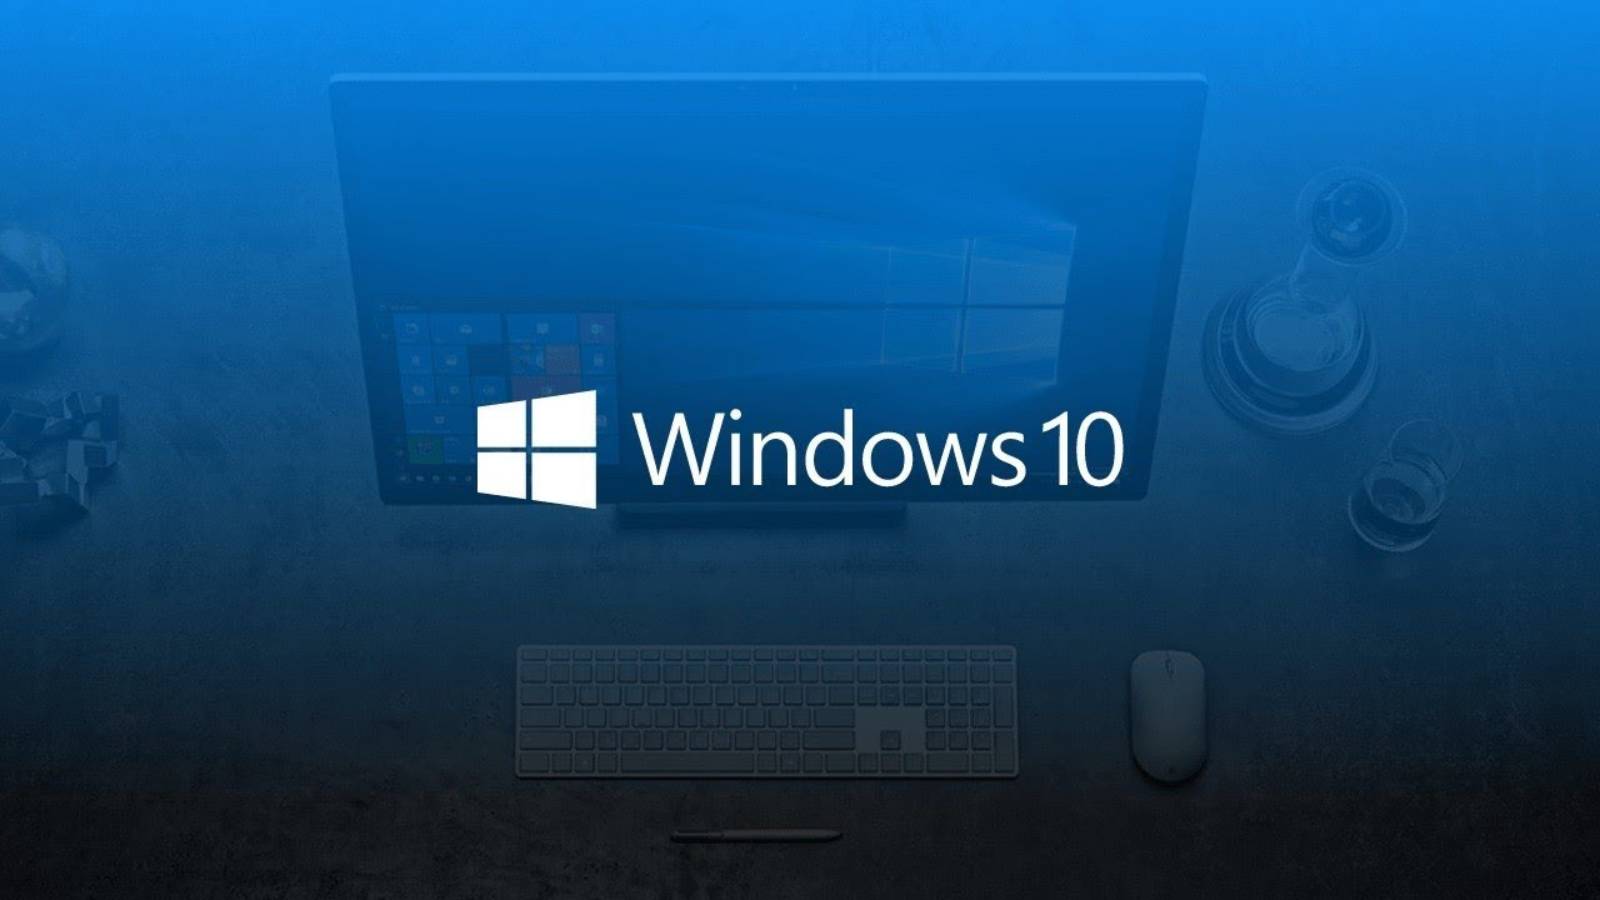 Windows 10 fast ring